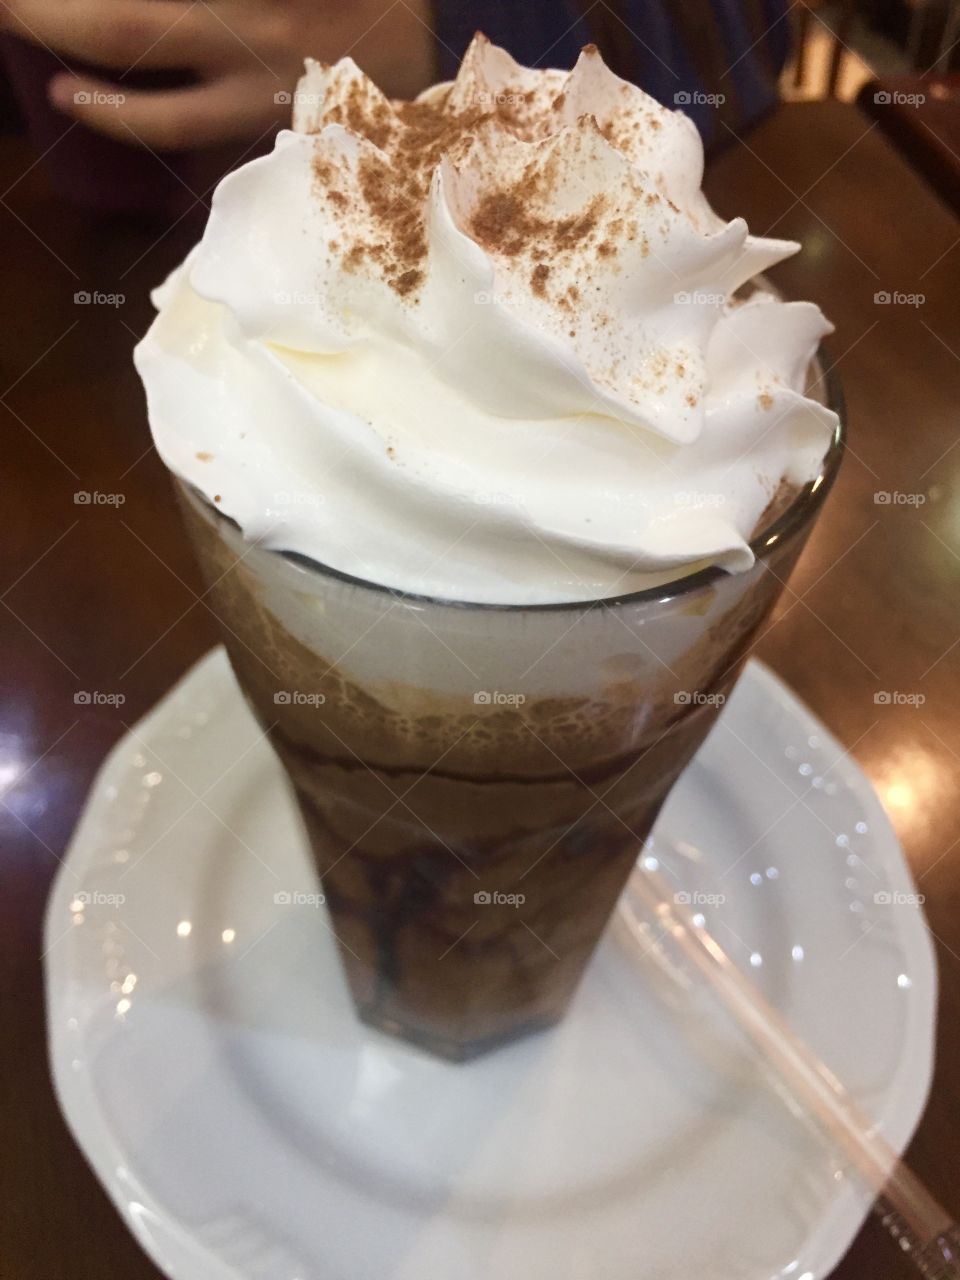 Coffee milkshake - Coffee, smooth vanilla ice cream and milk topped with whipped cream